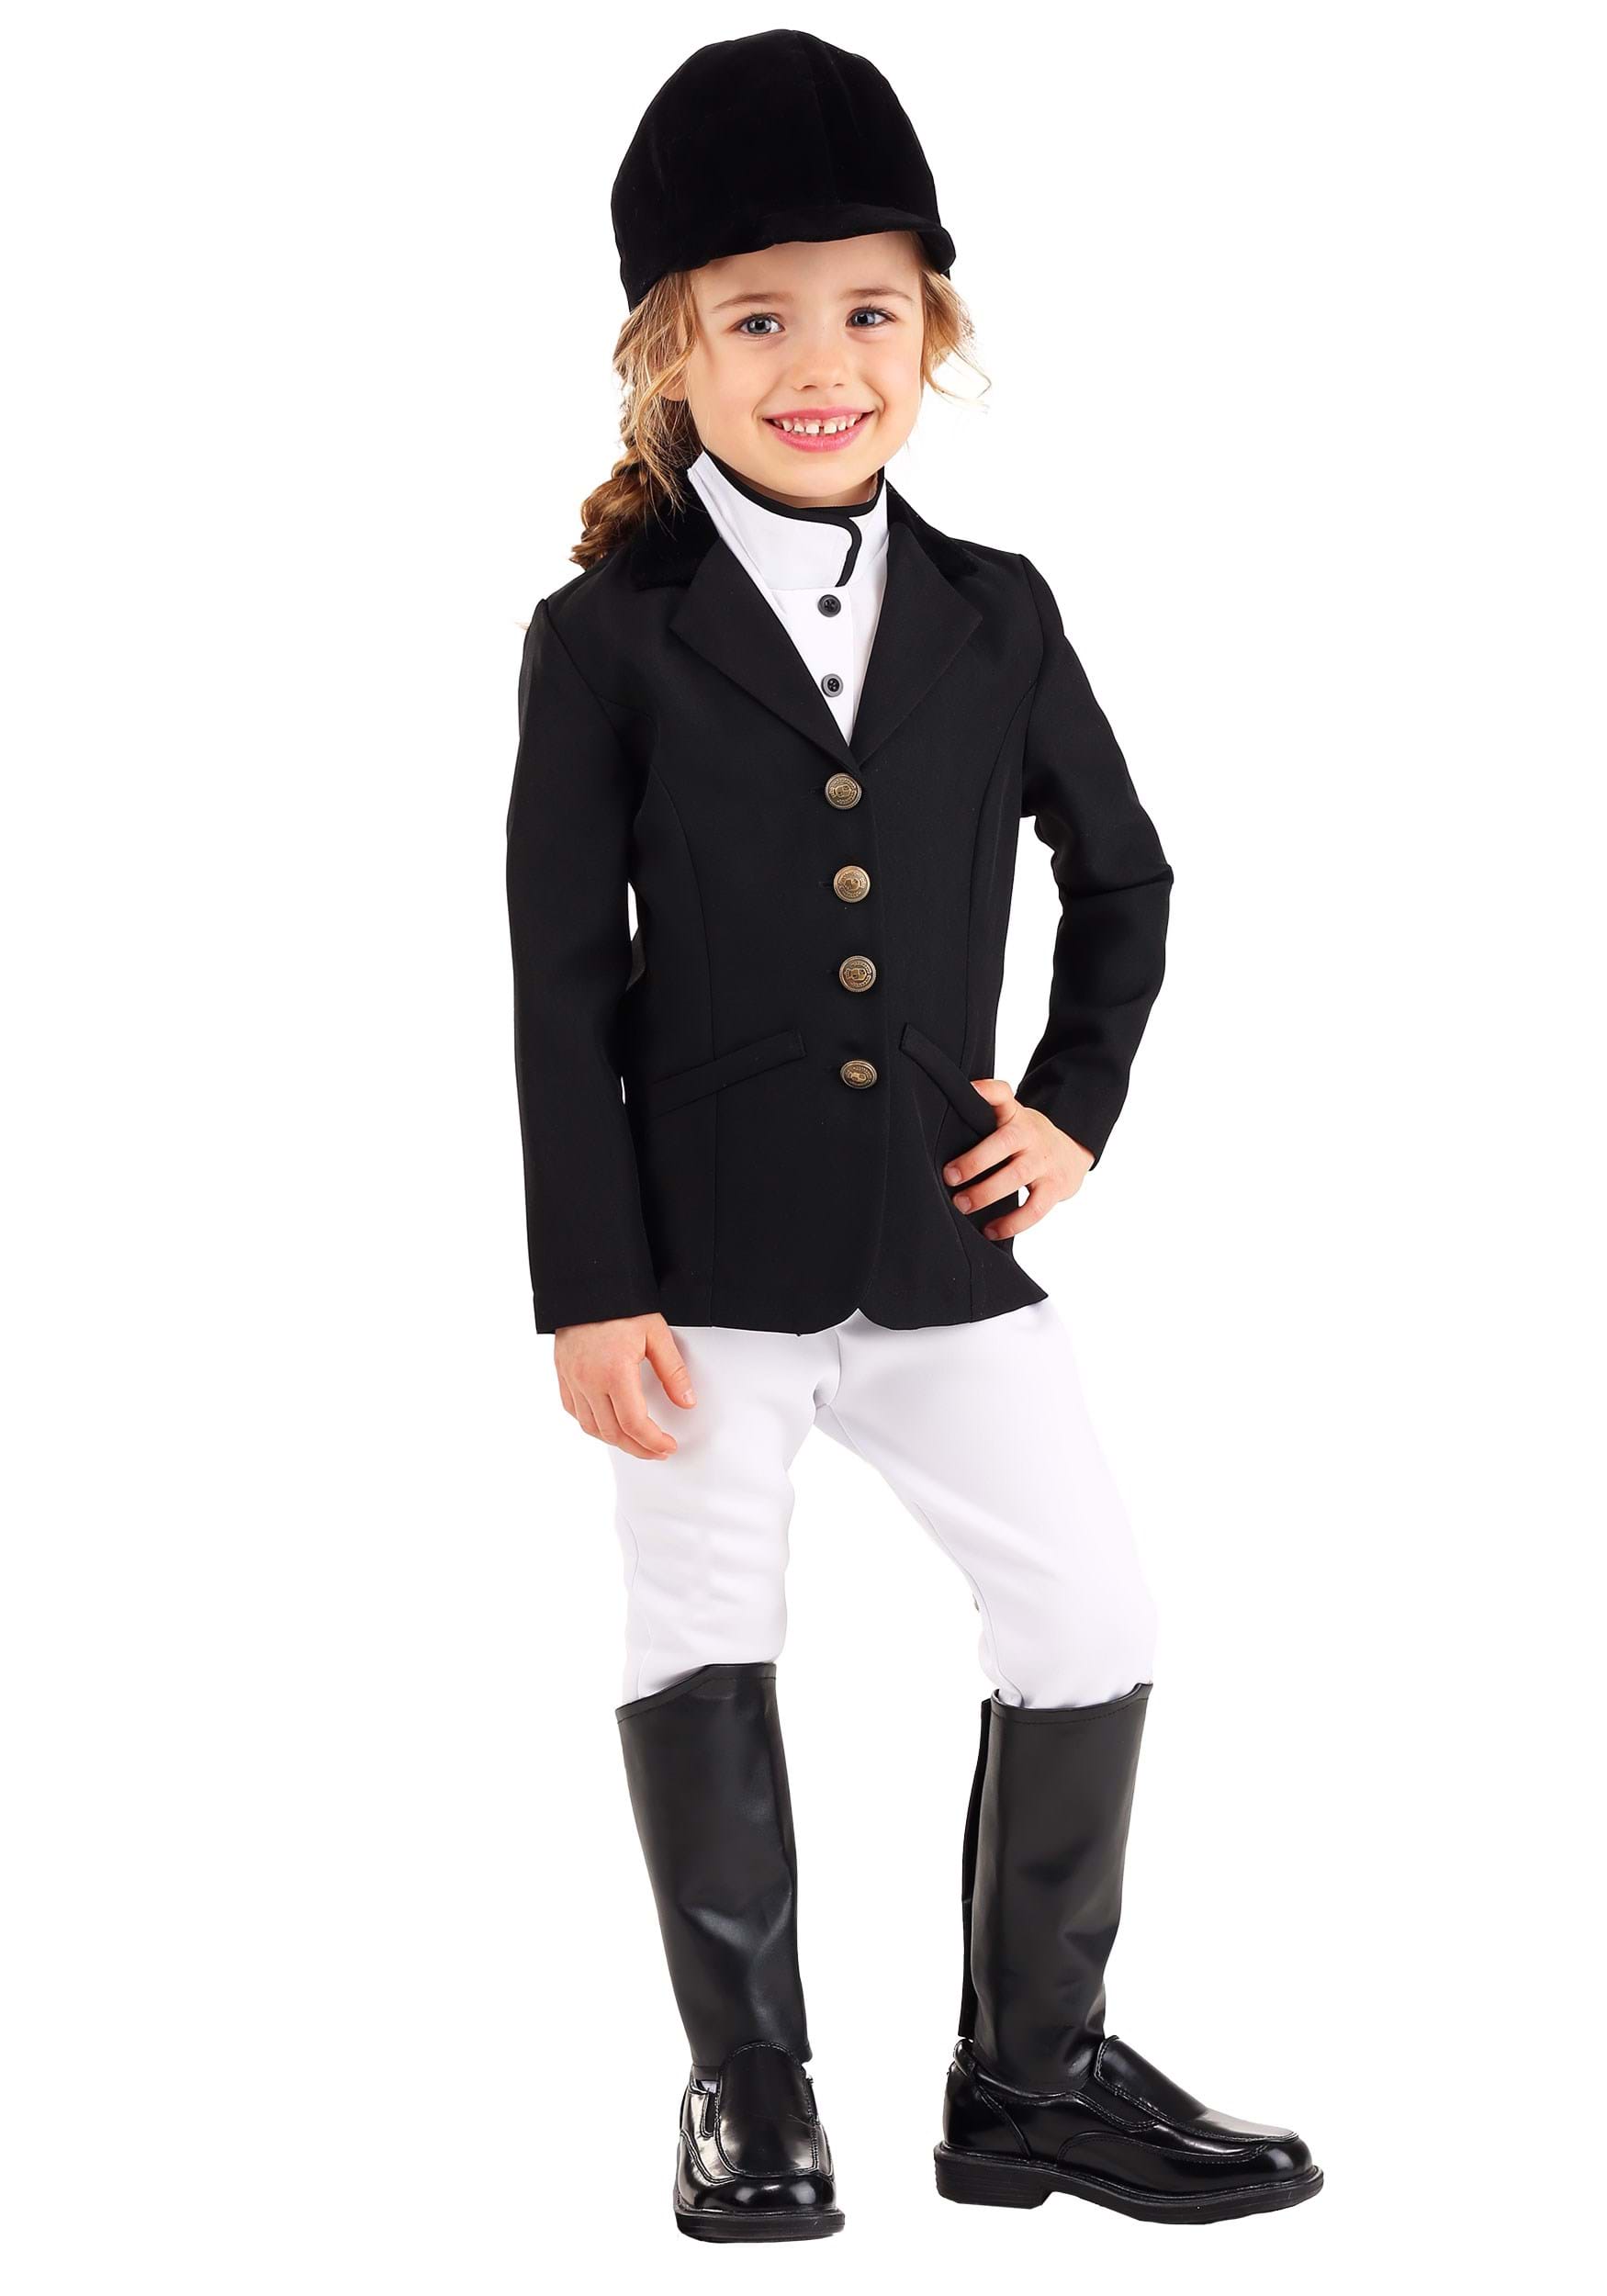 Photos - Fancy Dress Toddler FUN Costumes Equestrian  Costume Black/White FUN9412TD 